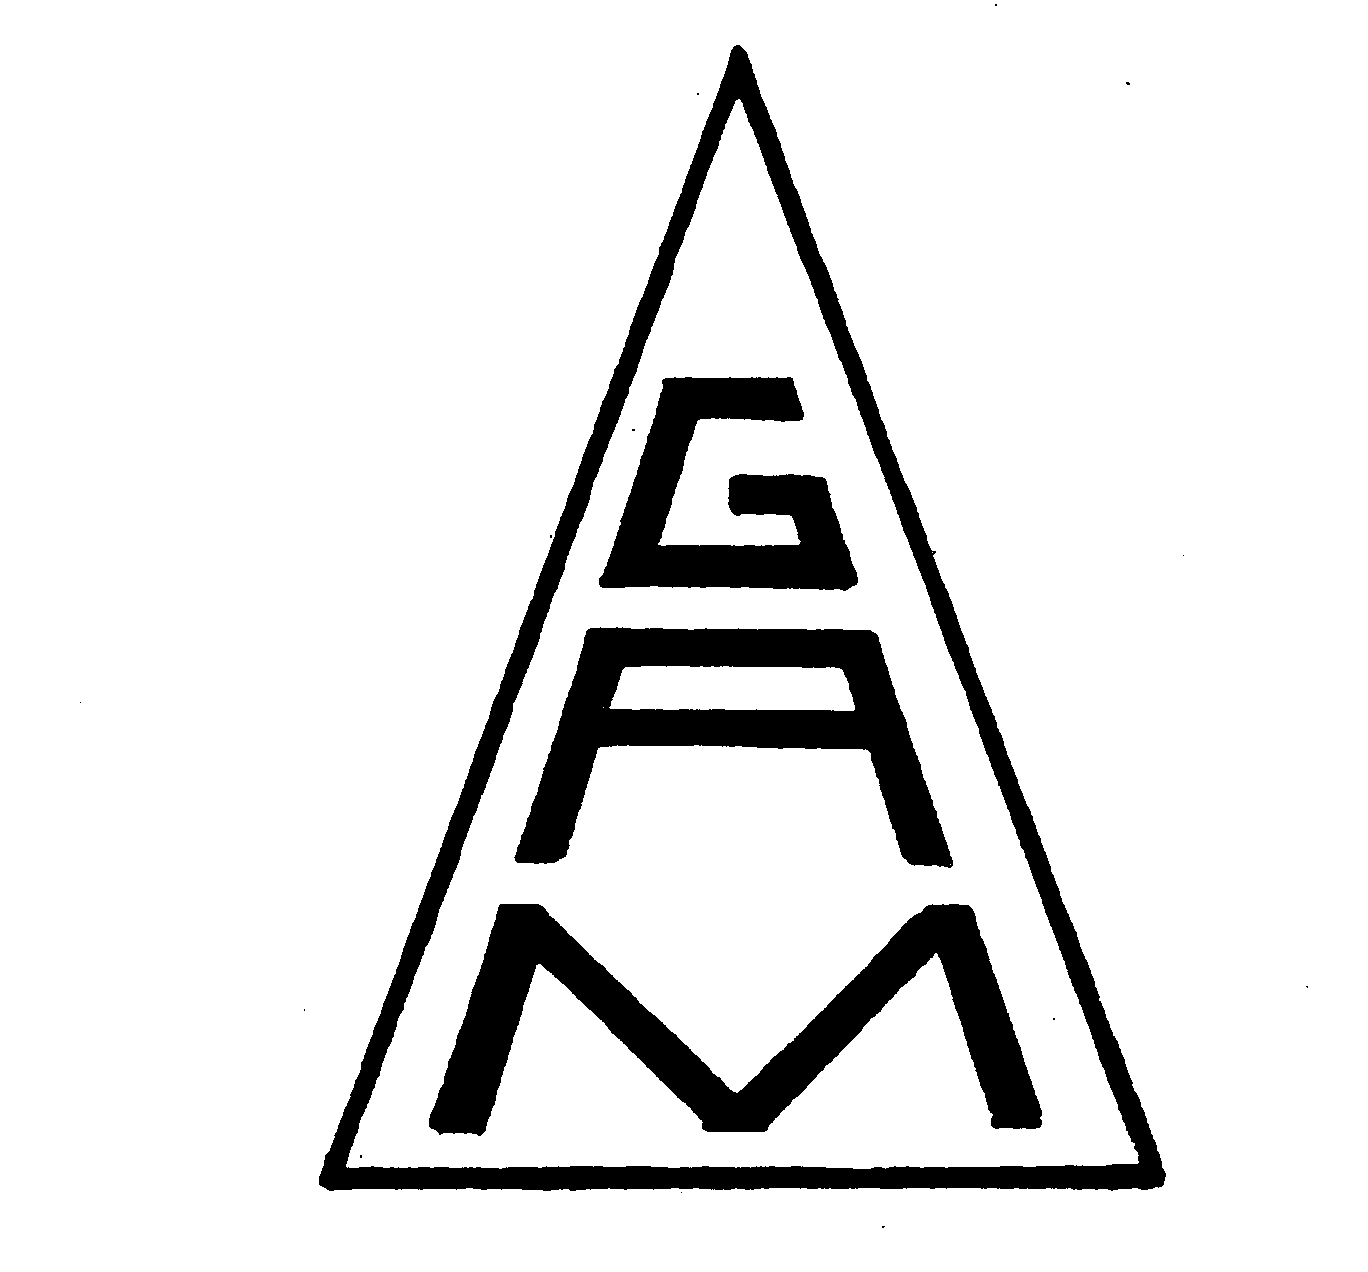 Trademark Logo GAM